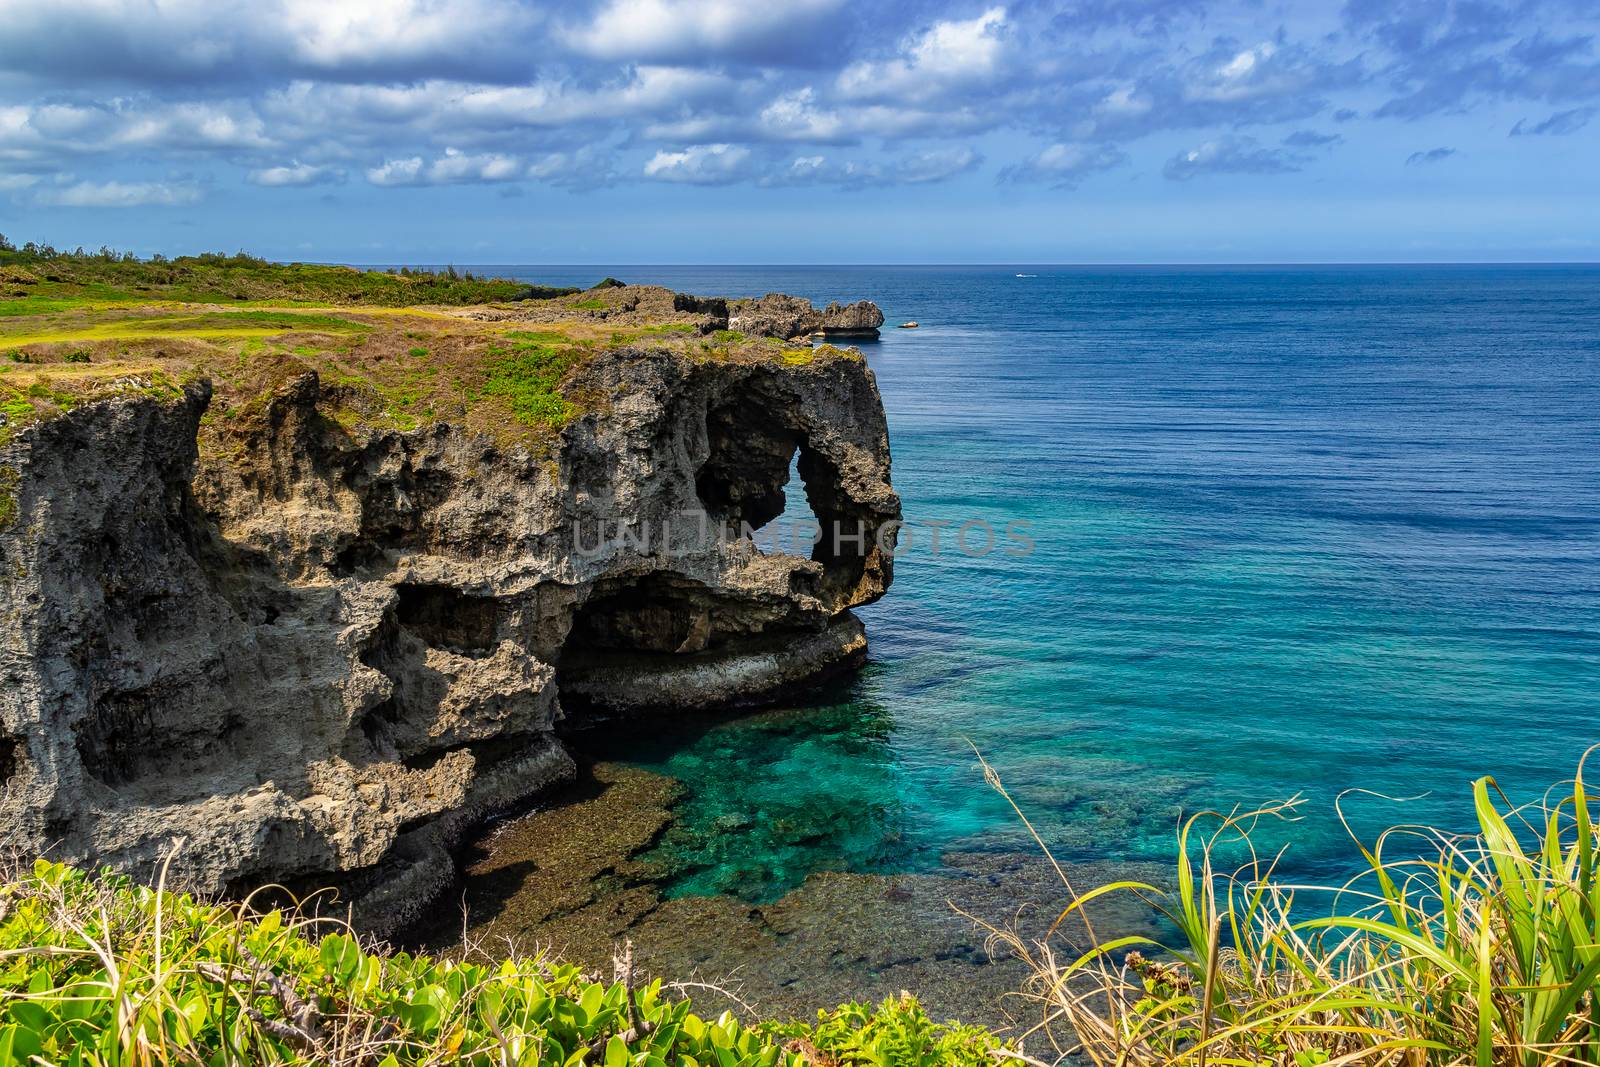 Cape Manzamo (Manzamou lit), Okinawa , Japan. It is a scenic rock formation on Okinawa Island.